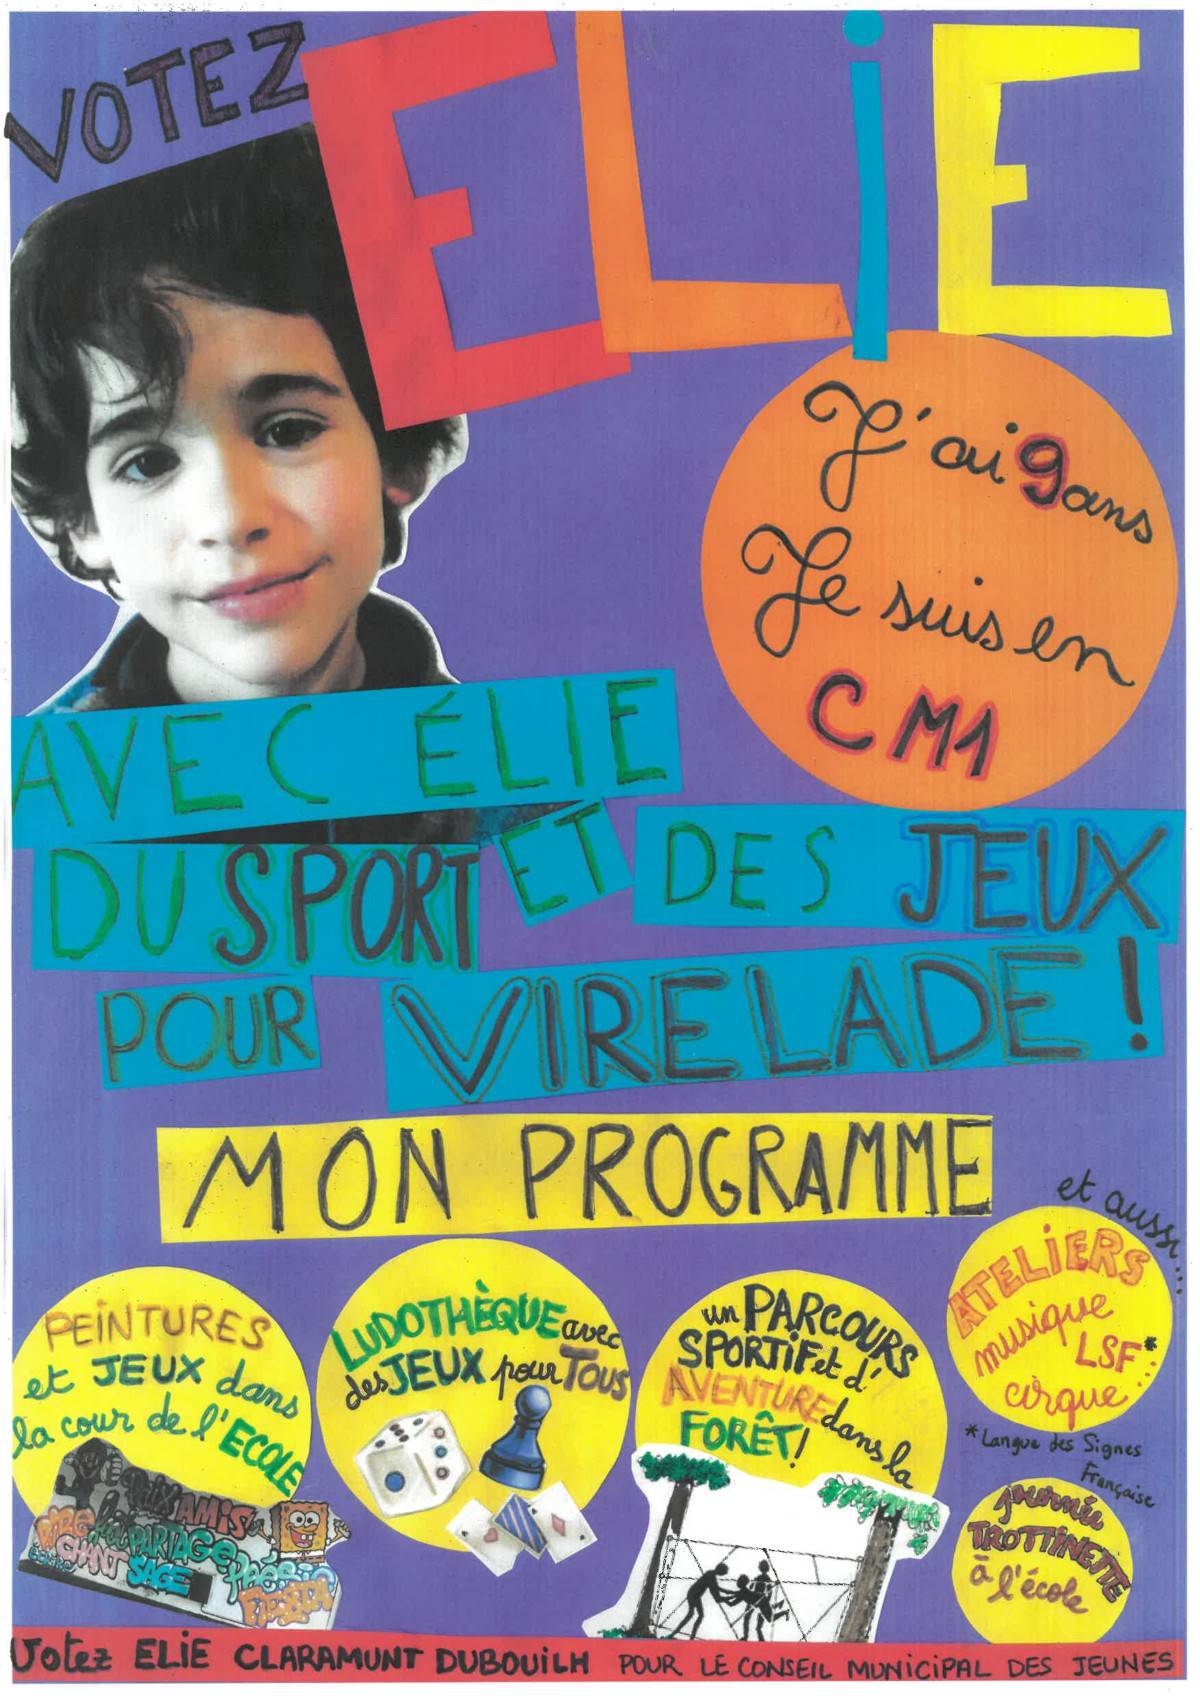 Photo Affiche Elie Claramunt dubouil, candidat au CMJ de Virelade